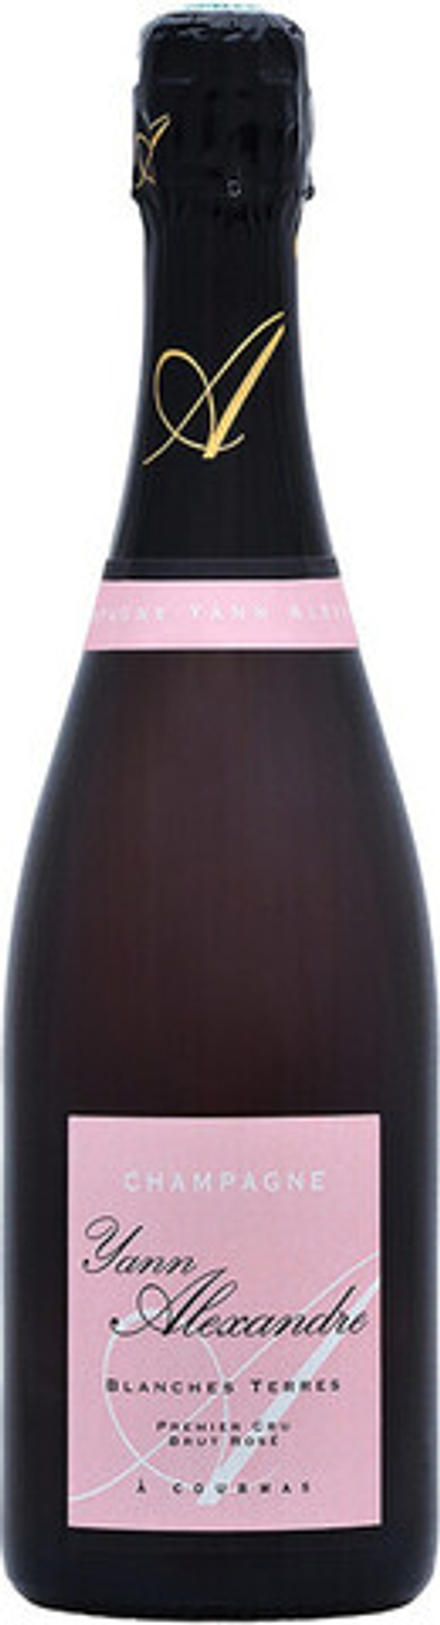 Шампанское Champagne Yann Alexandre Blanches Terres Premier Cru Brut Rose, 0,75 л.